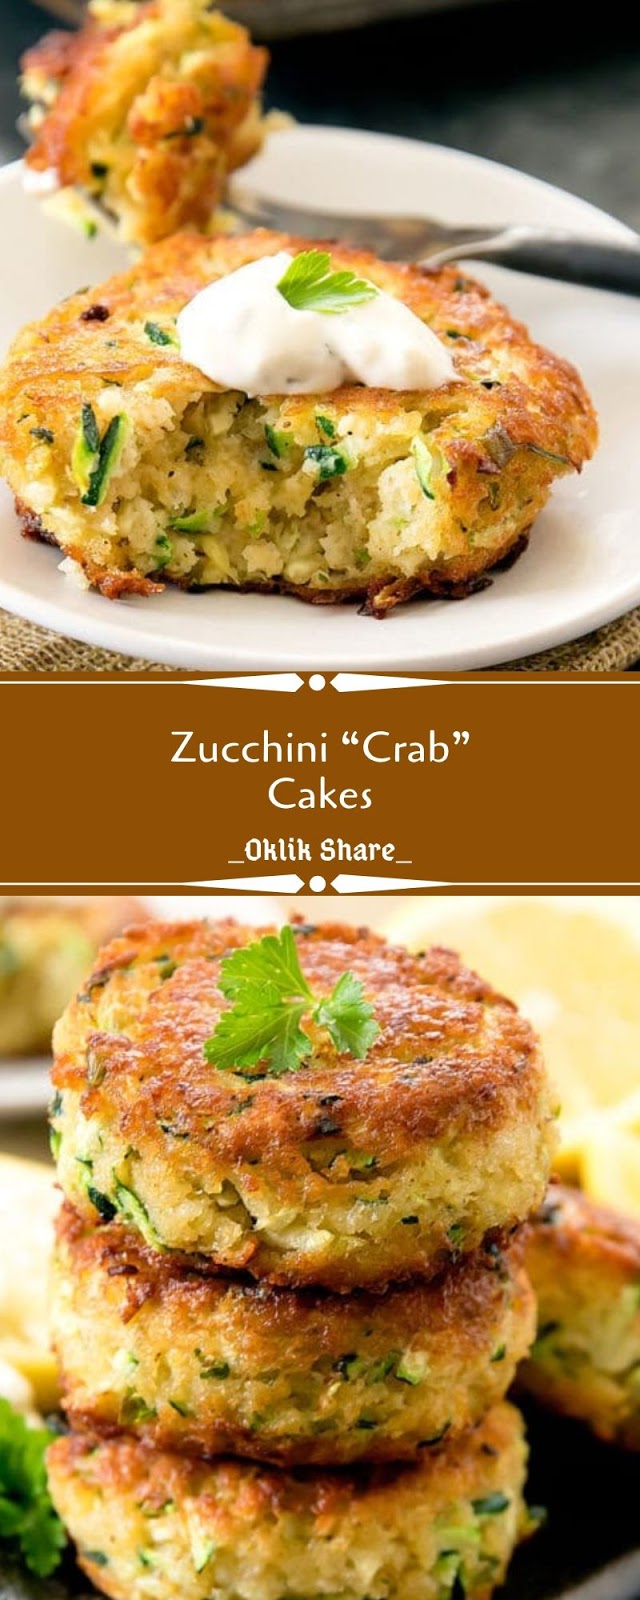 Zucchini “Crab” Cakes